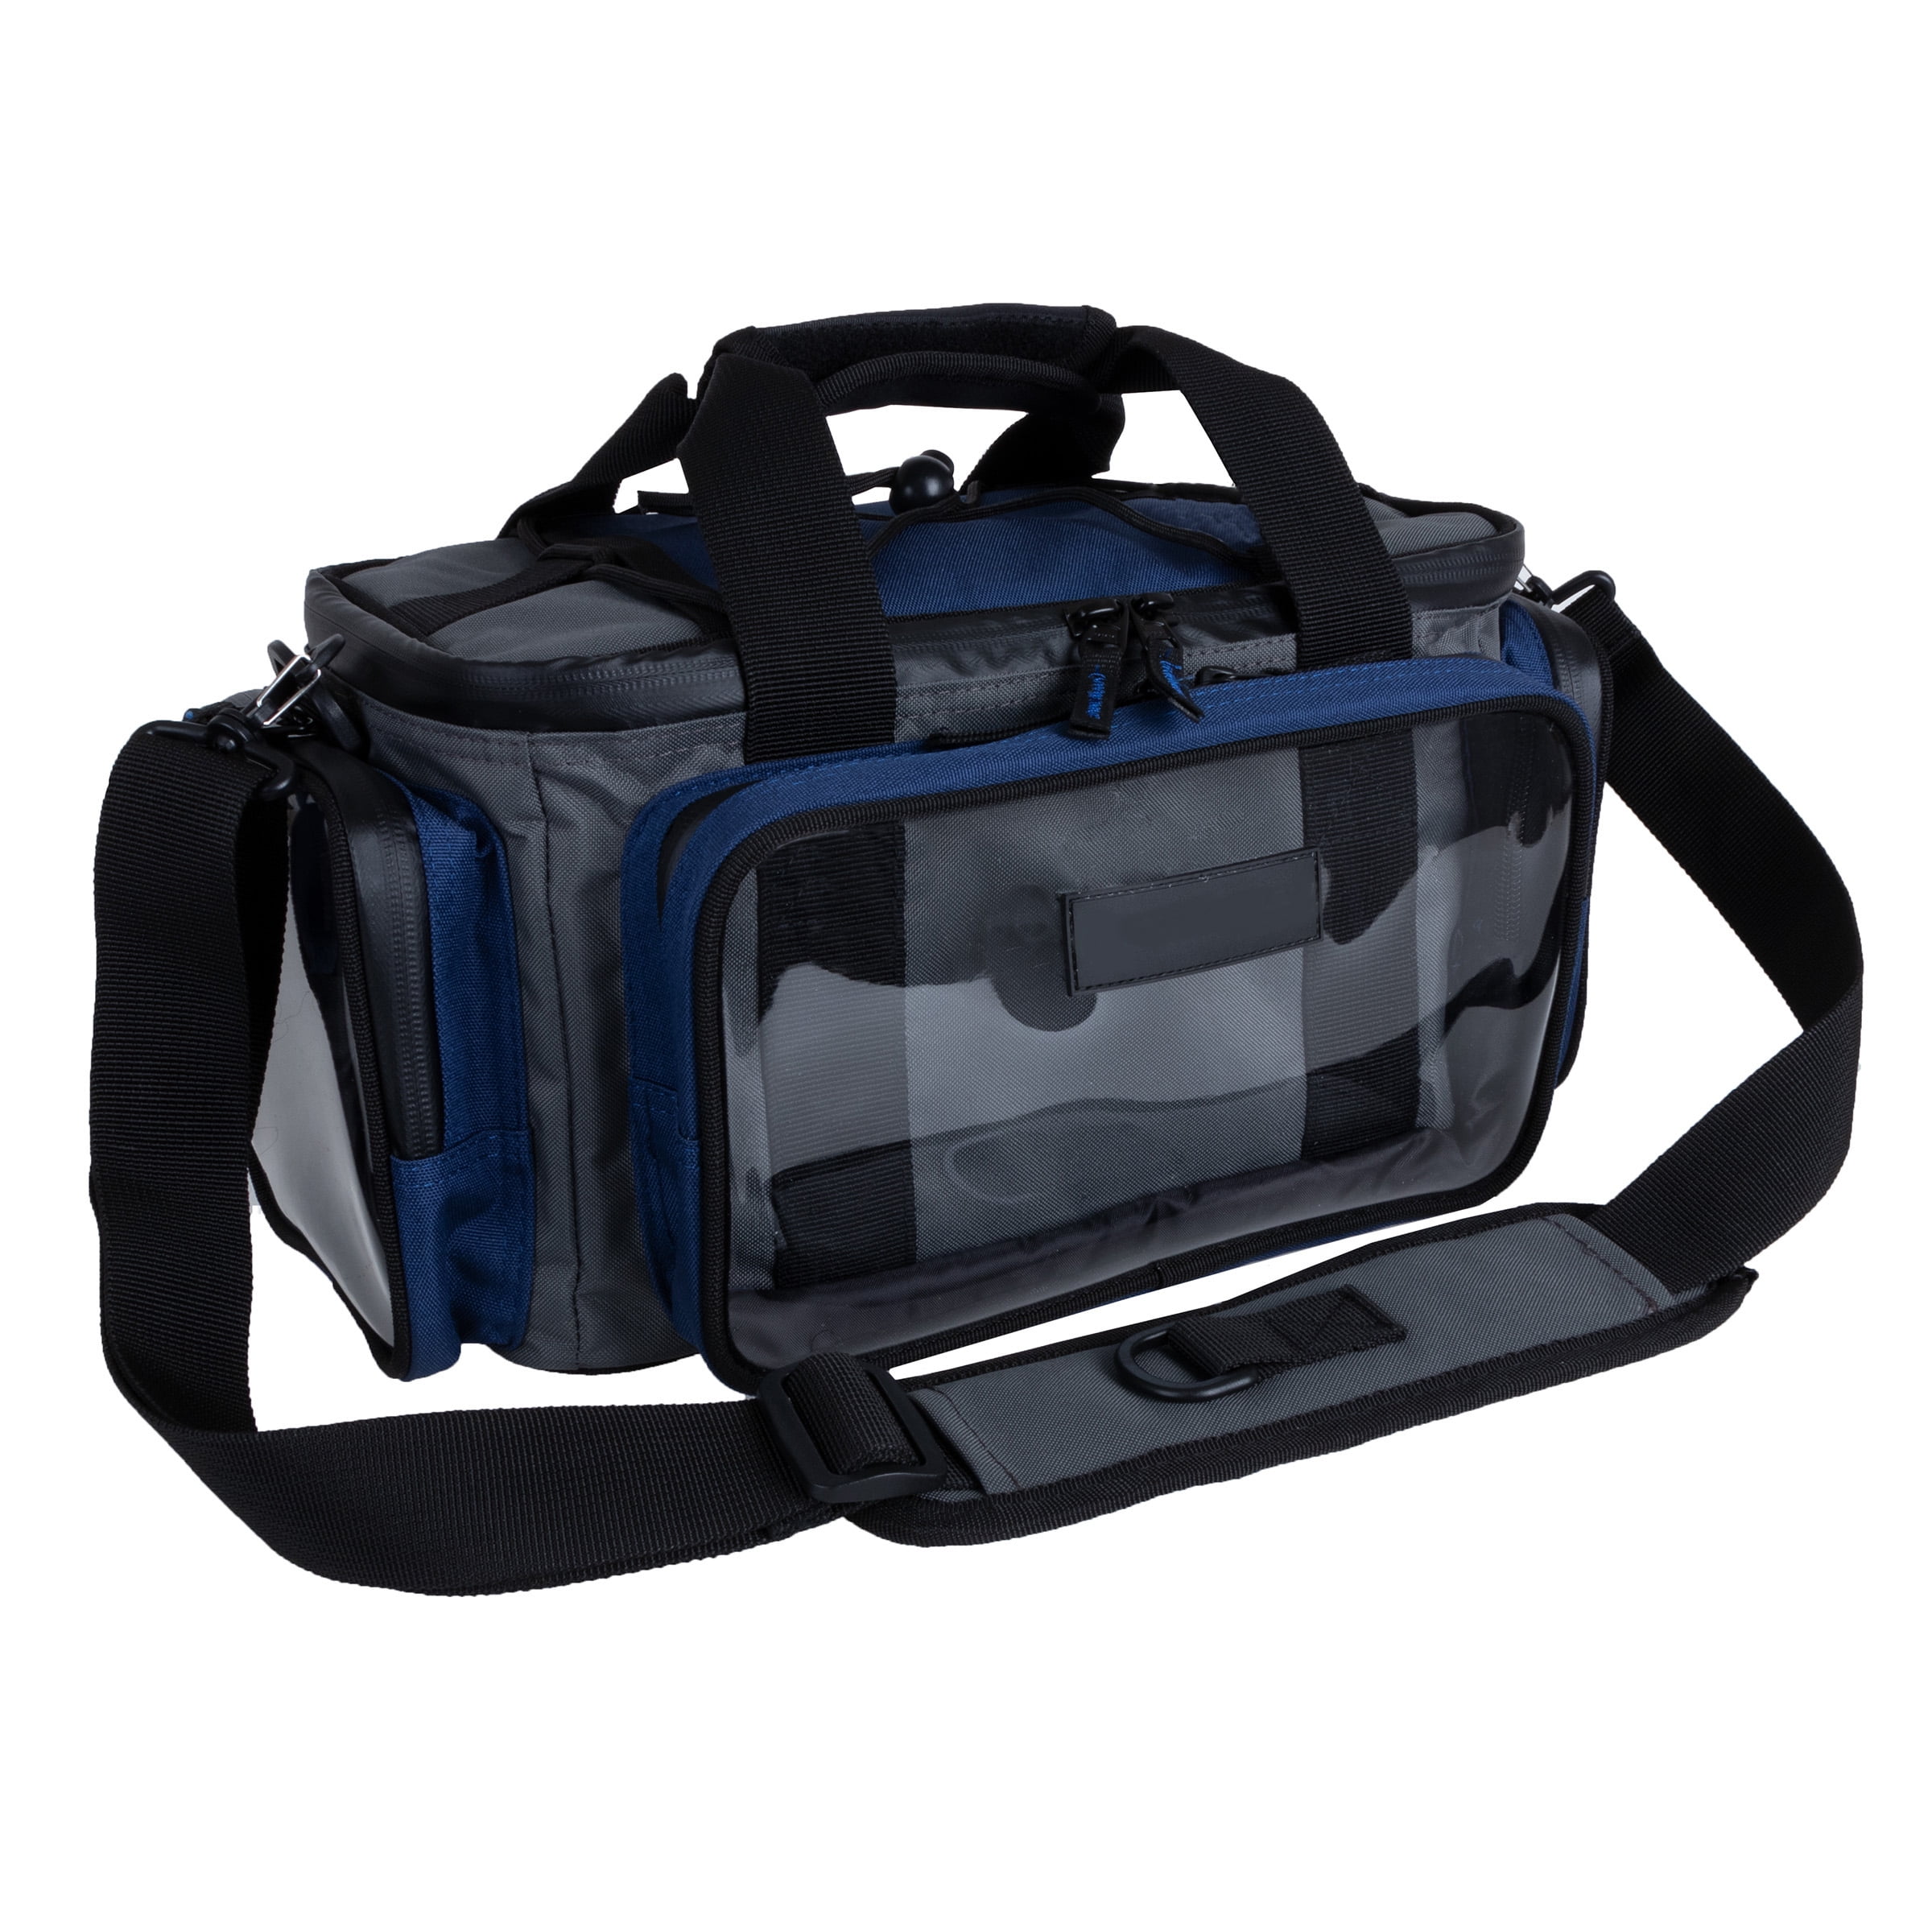 Rad Sportz Tackle Bag – Fishing Gear Storage with Non-Slip Base